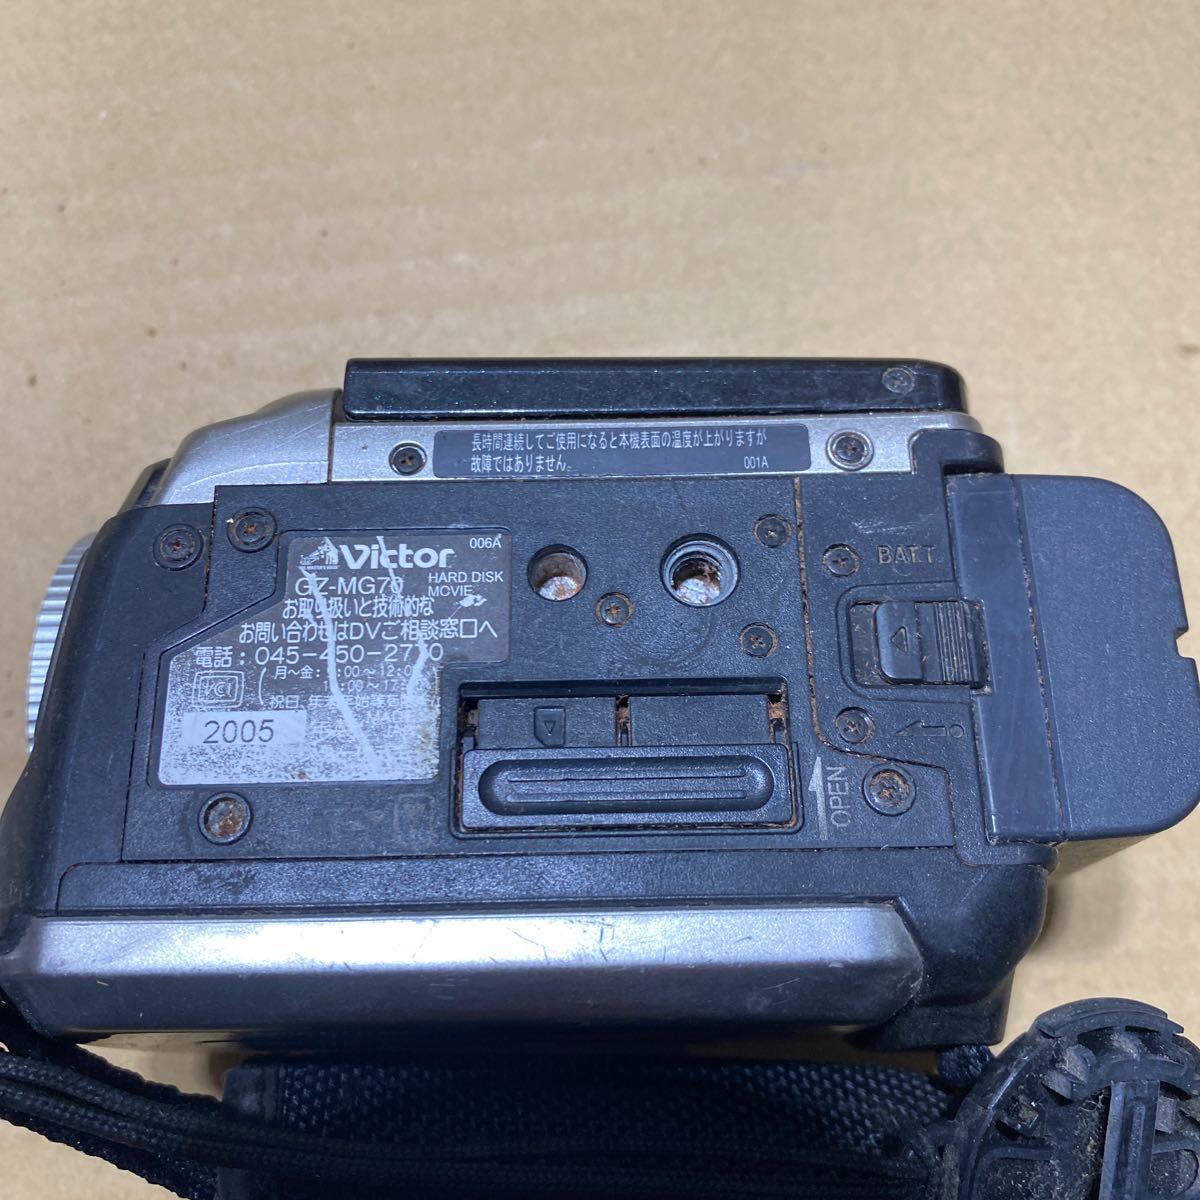 【F64】GZ-MG70 Victor ビクター ハードディスクムービー GZ-MG70 デジタルビデオカメラ【未確認】【60s】_画像3